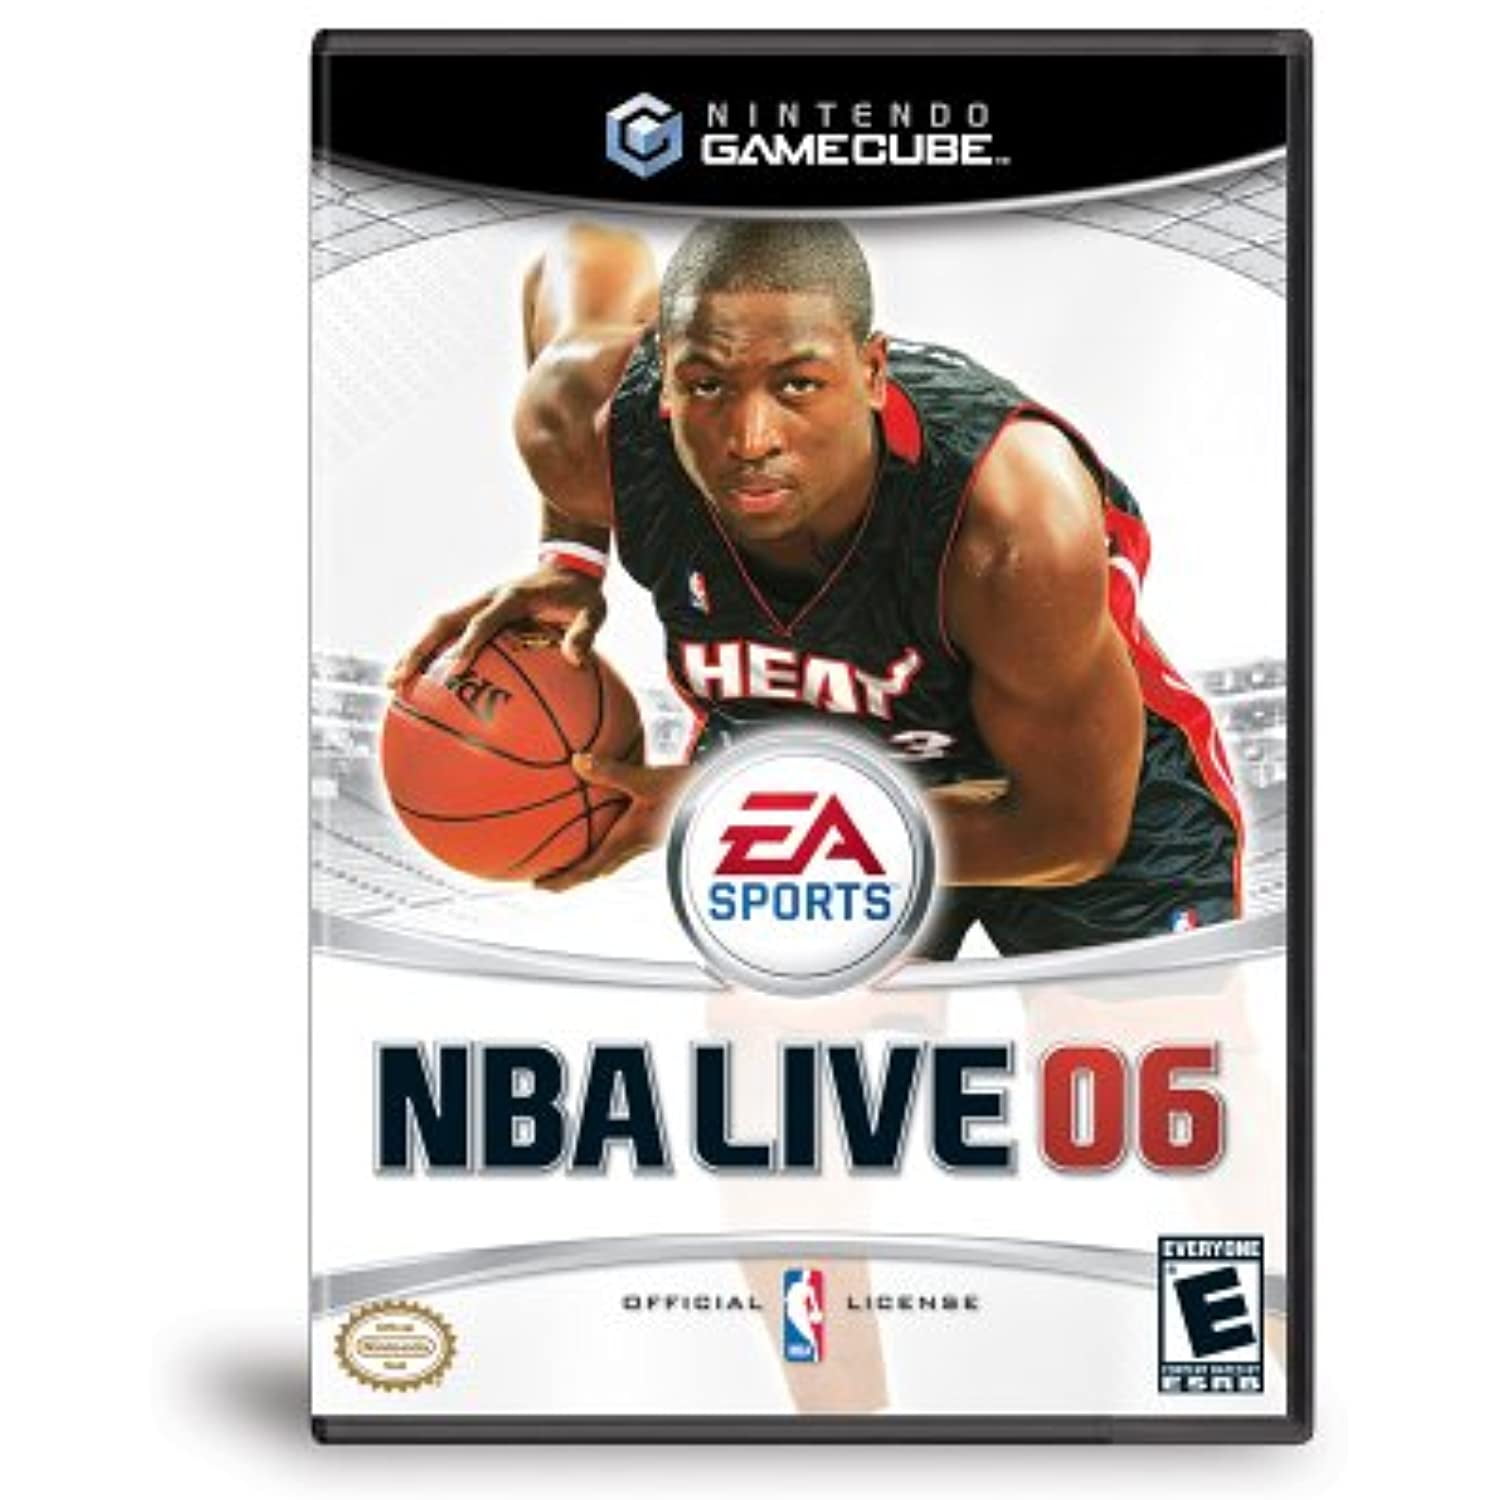 Nba Live 06 - Gamecube